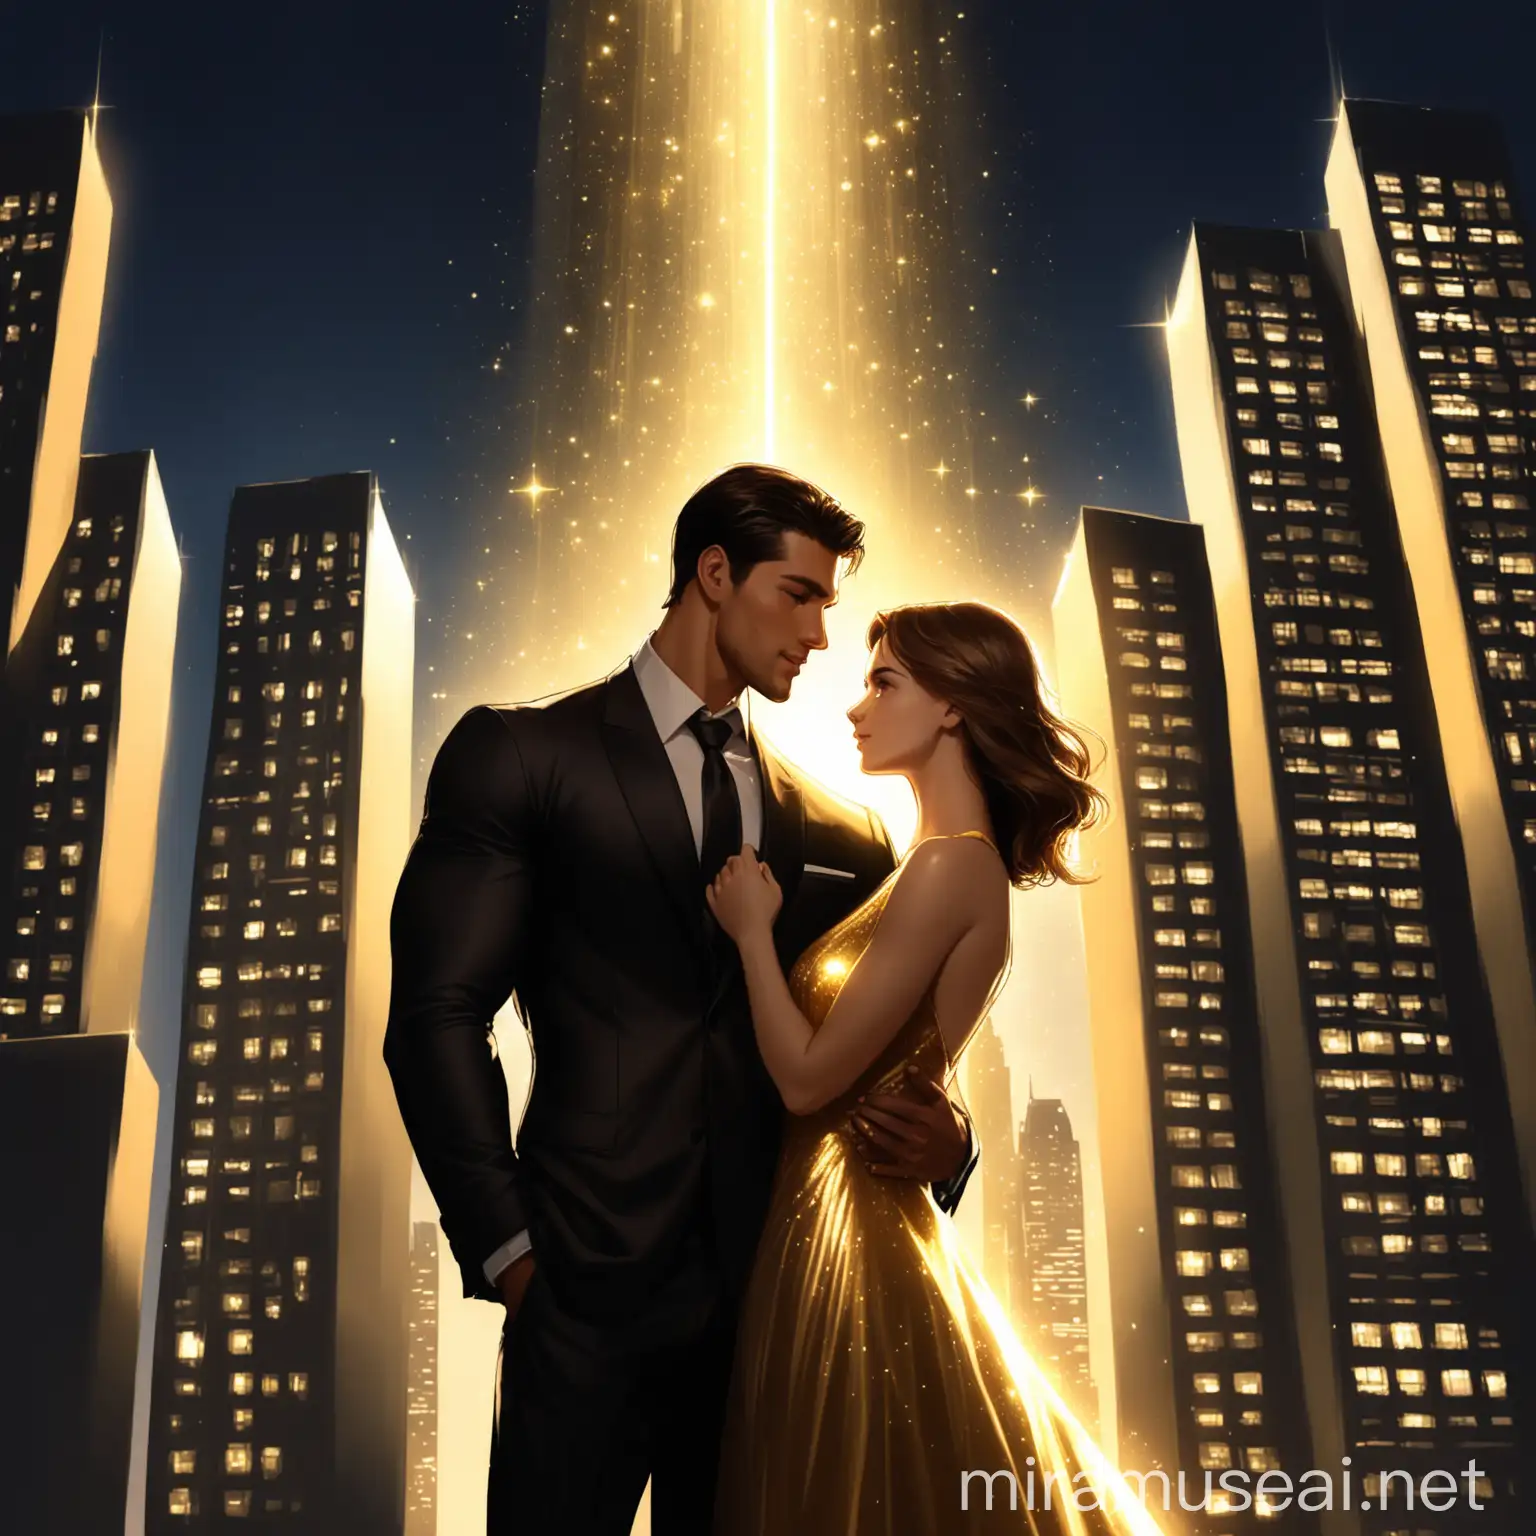 Elegant Couple in Evening Attire Embracing Against City Skyline